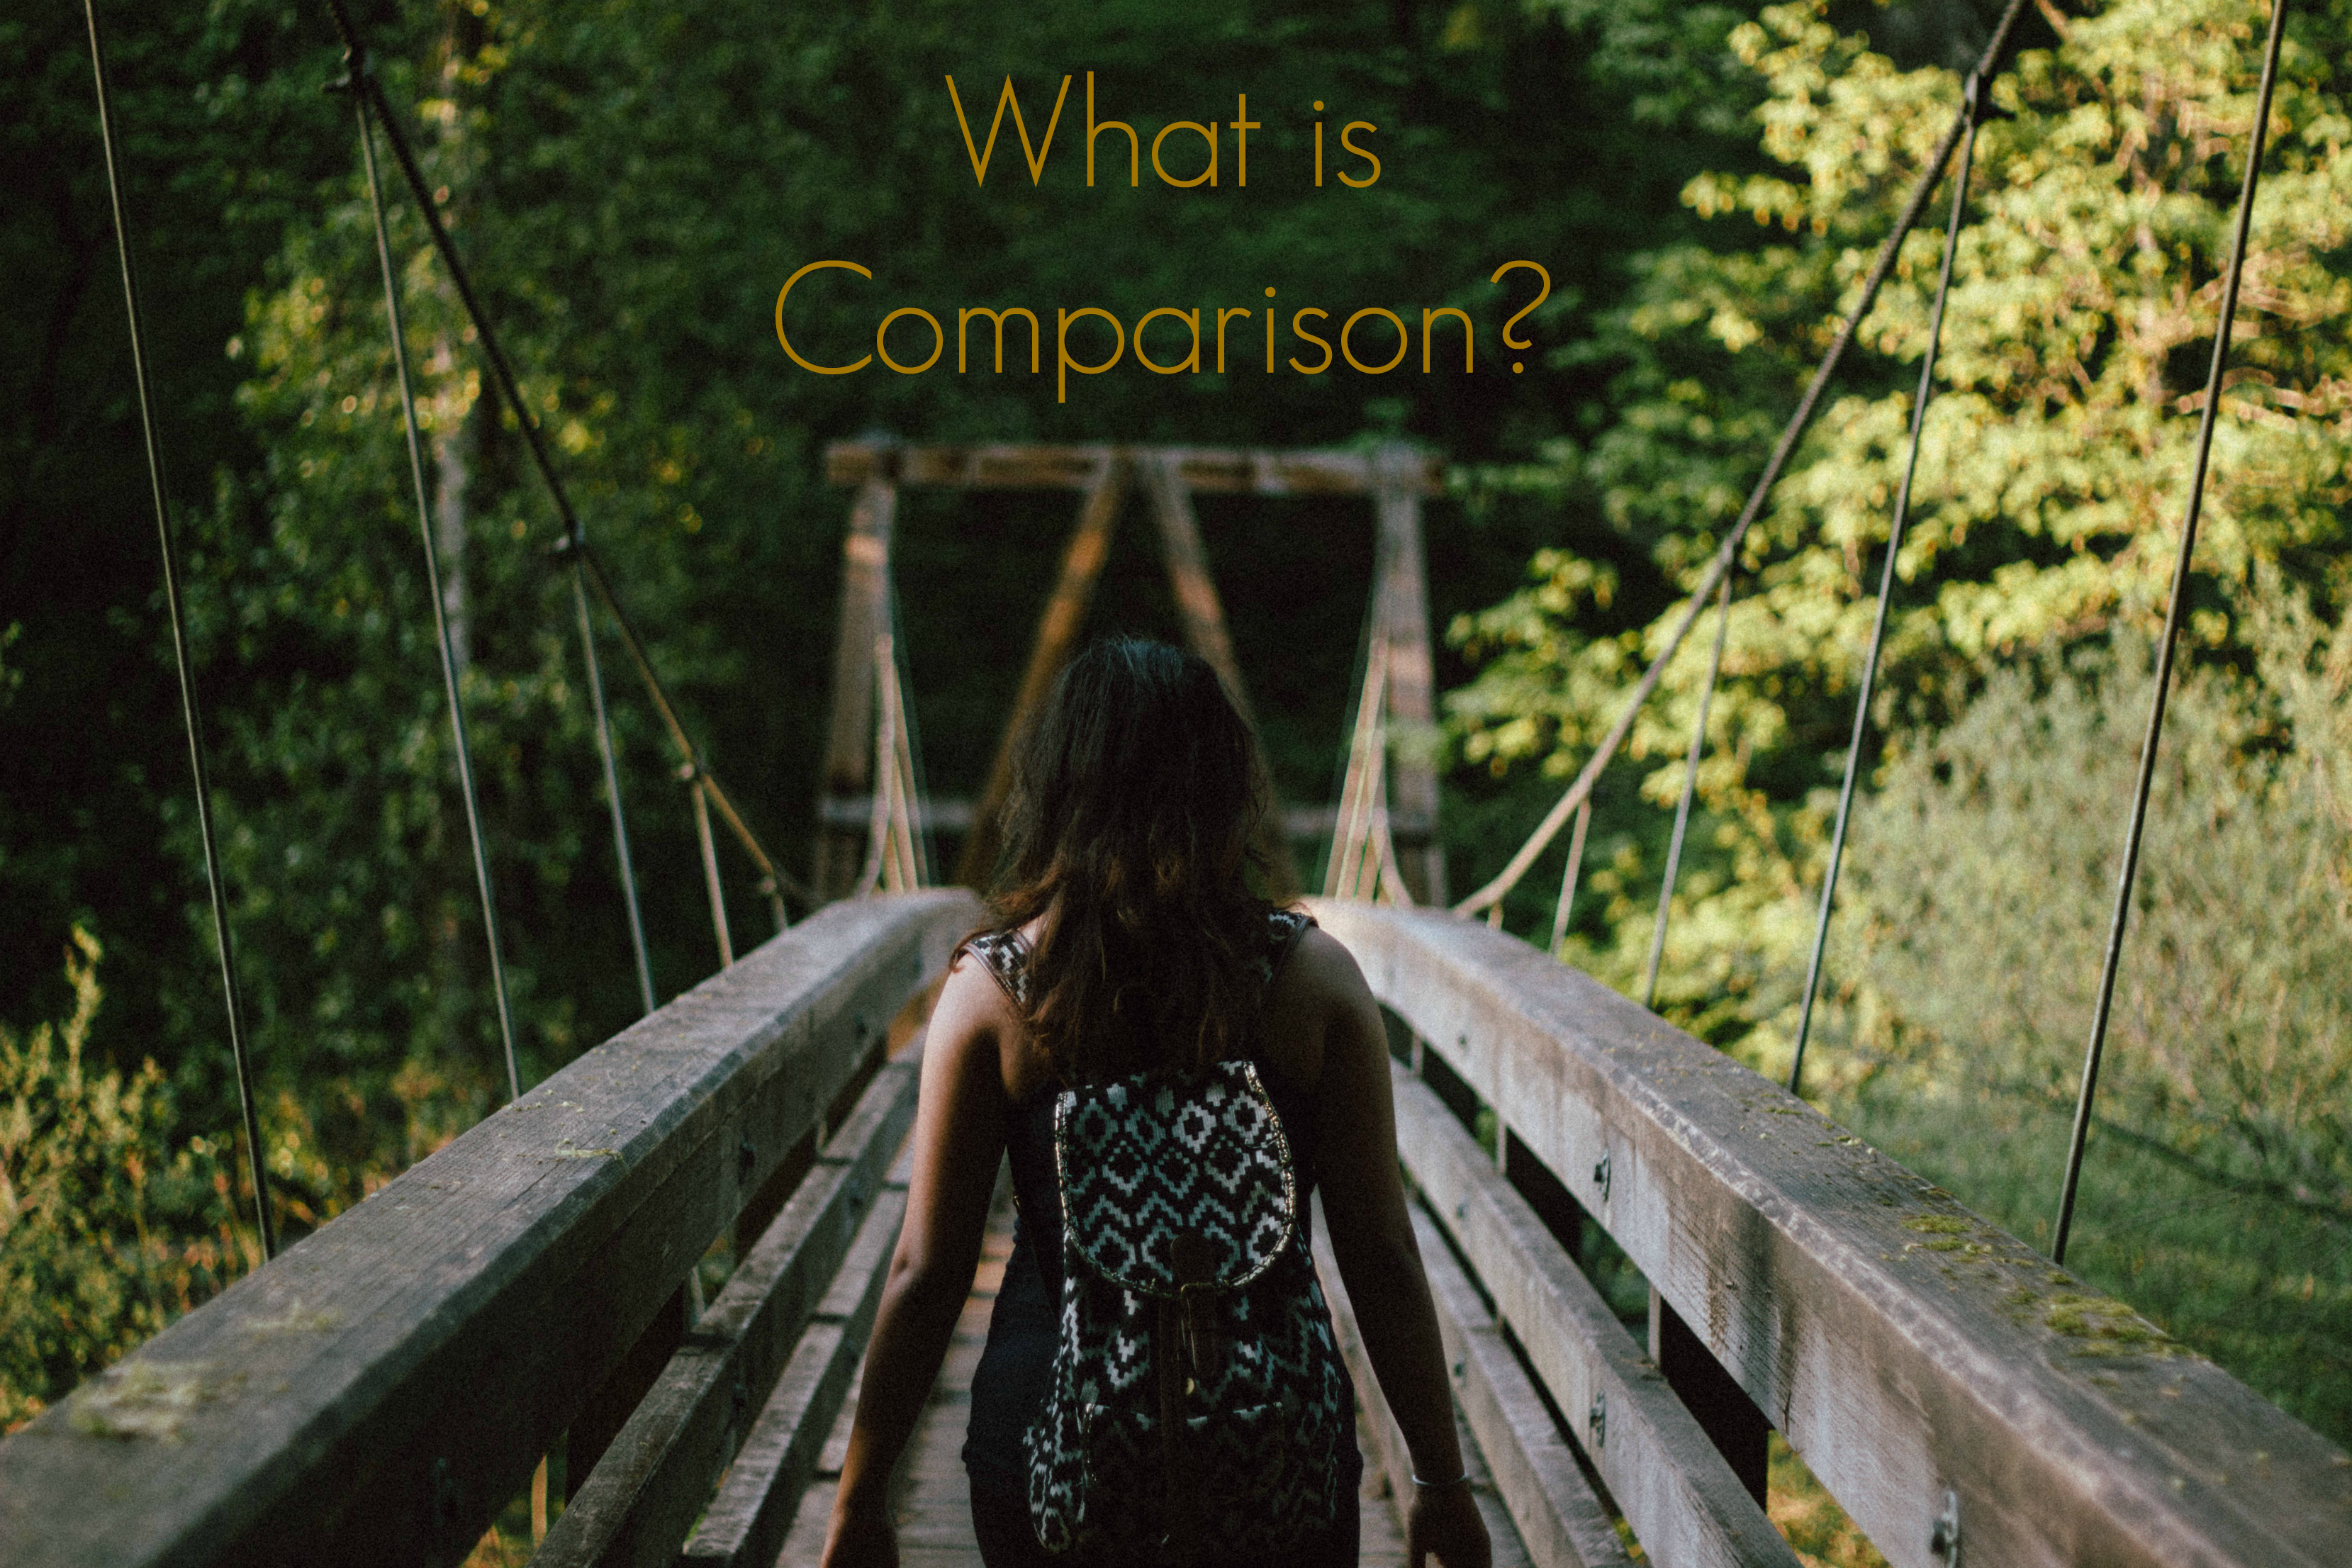 What is Comparison?